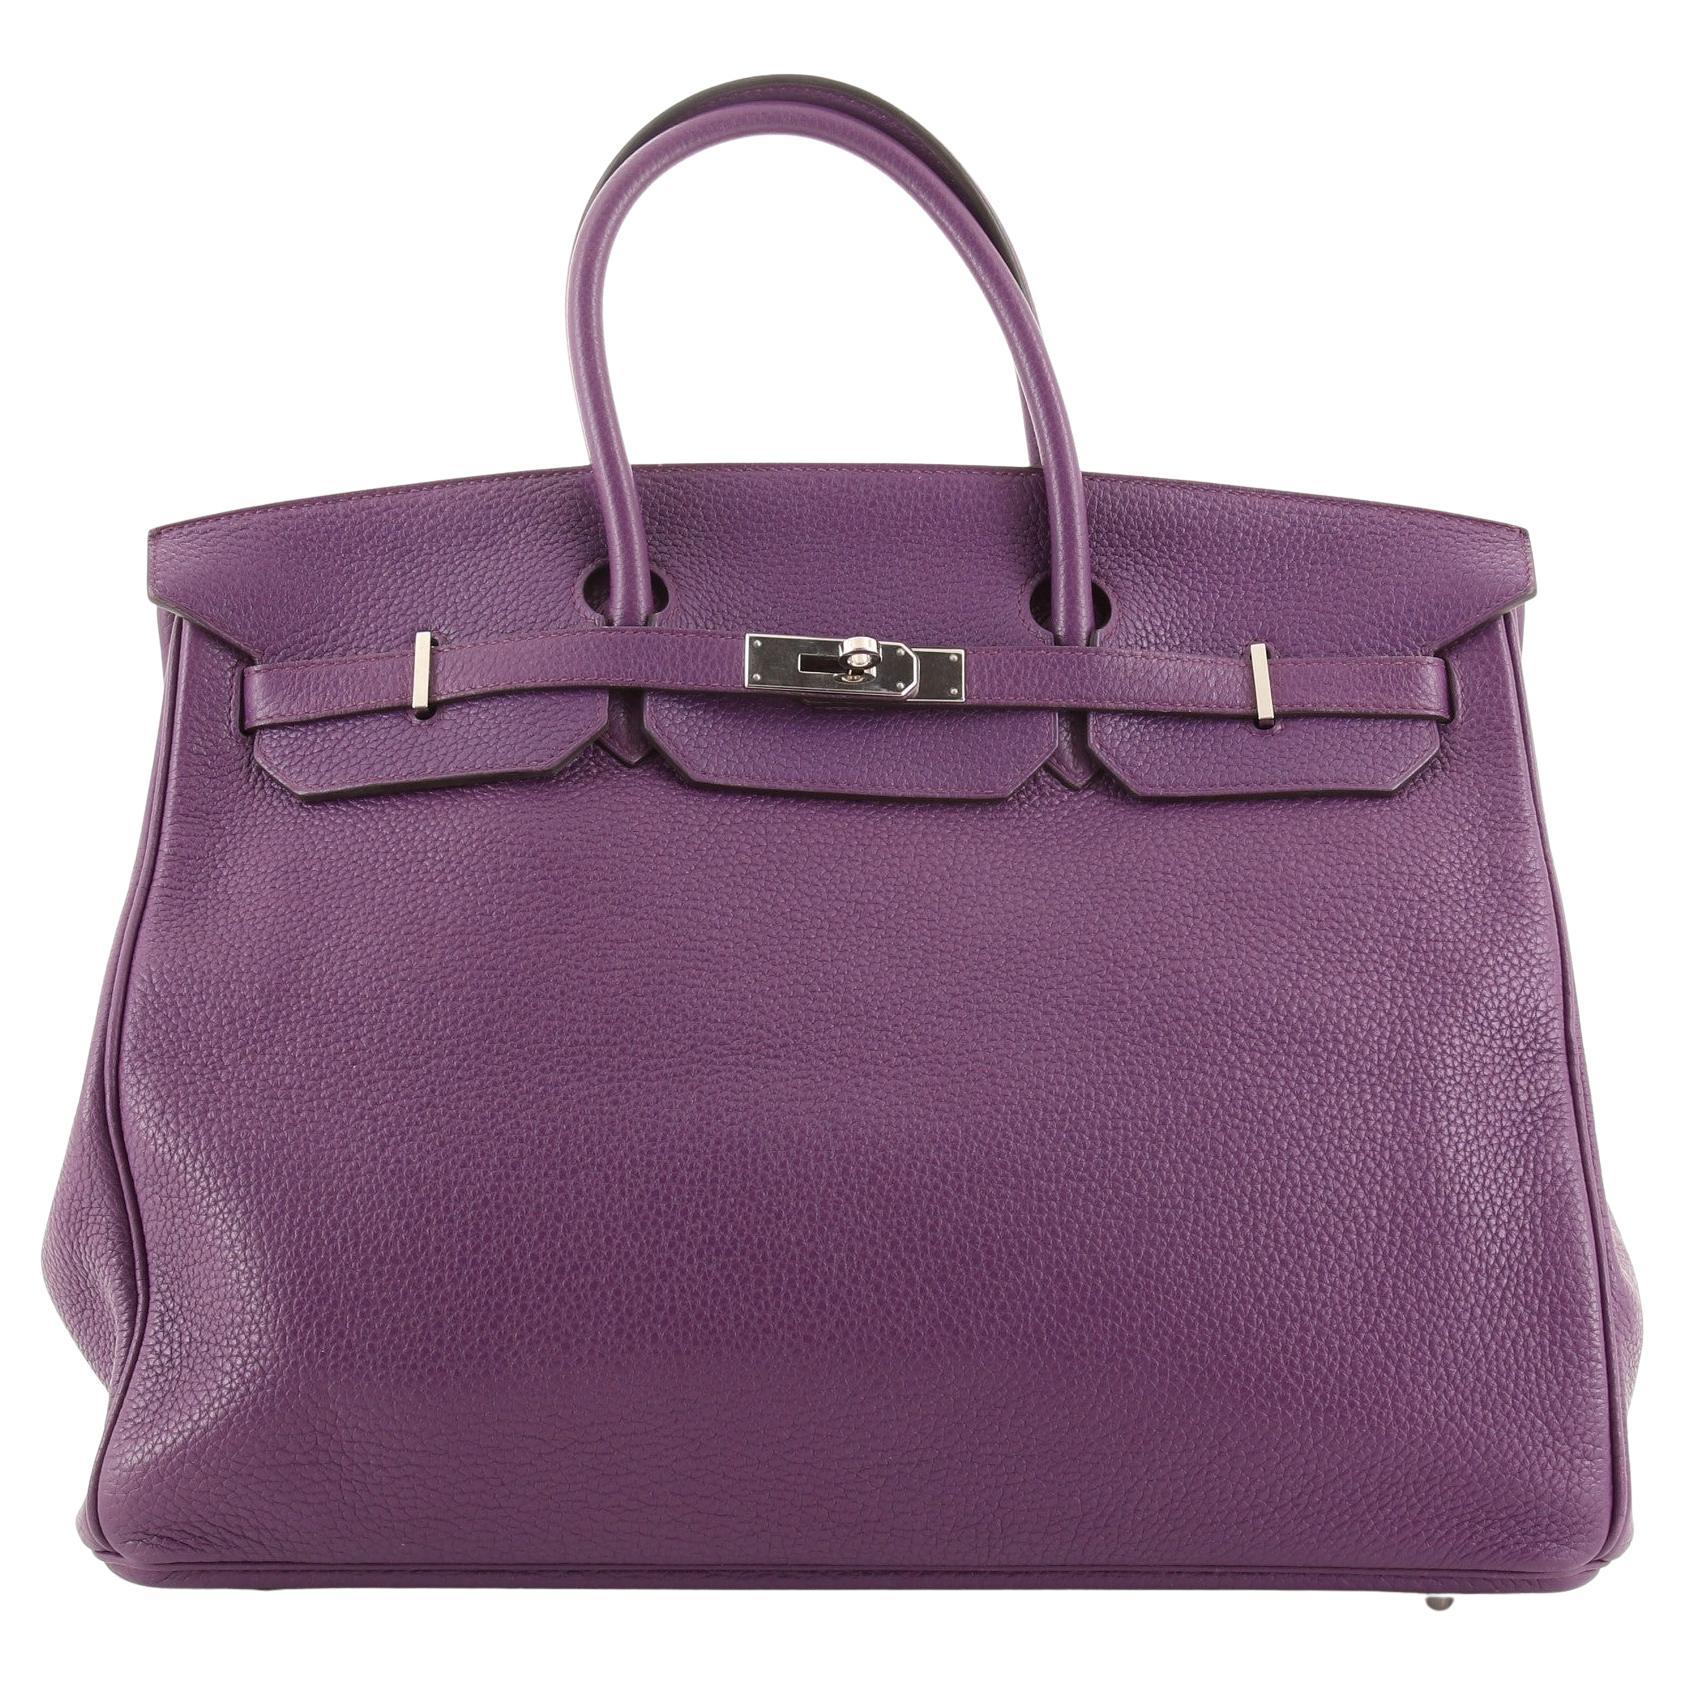 Hermes Birkin Handbag Ultraviolet Clemence with Palladium Hardware 40